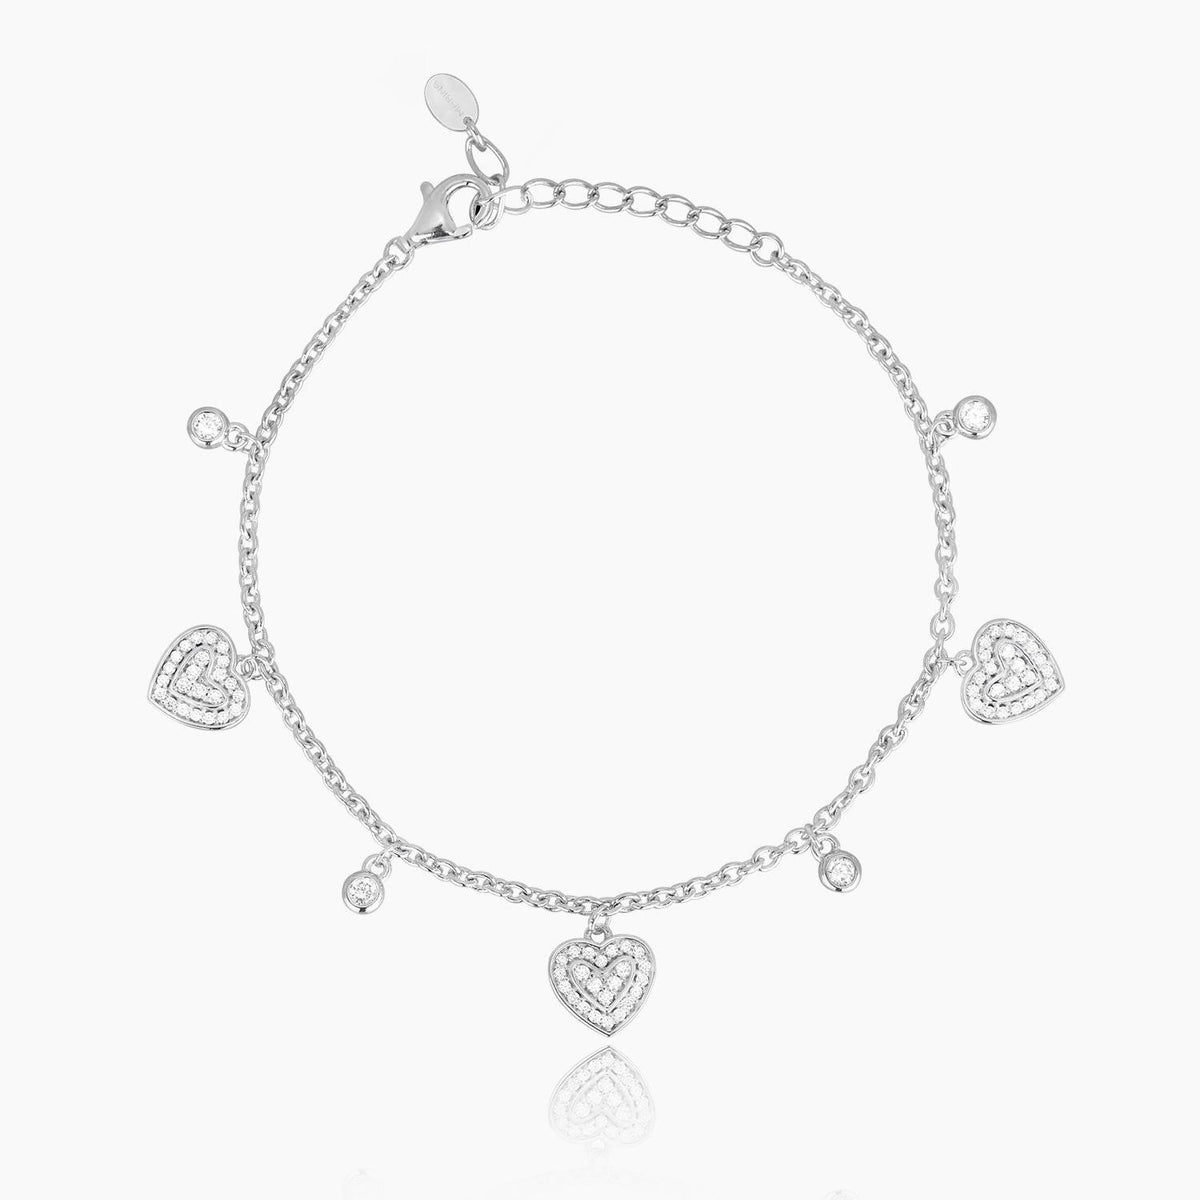 Groumette Bracelet in Silver Hearts Mabina Gioielli 533354